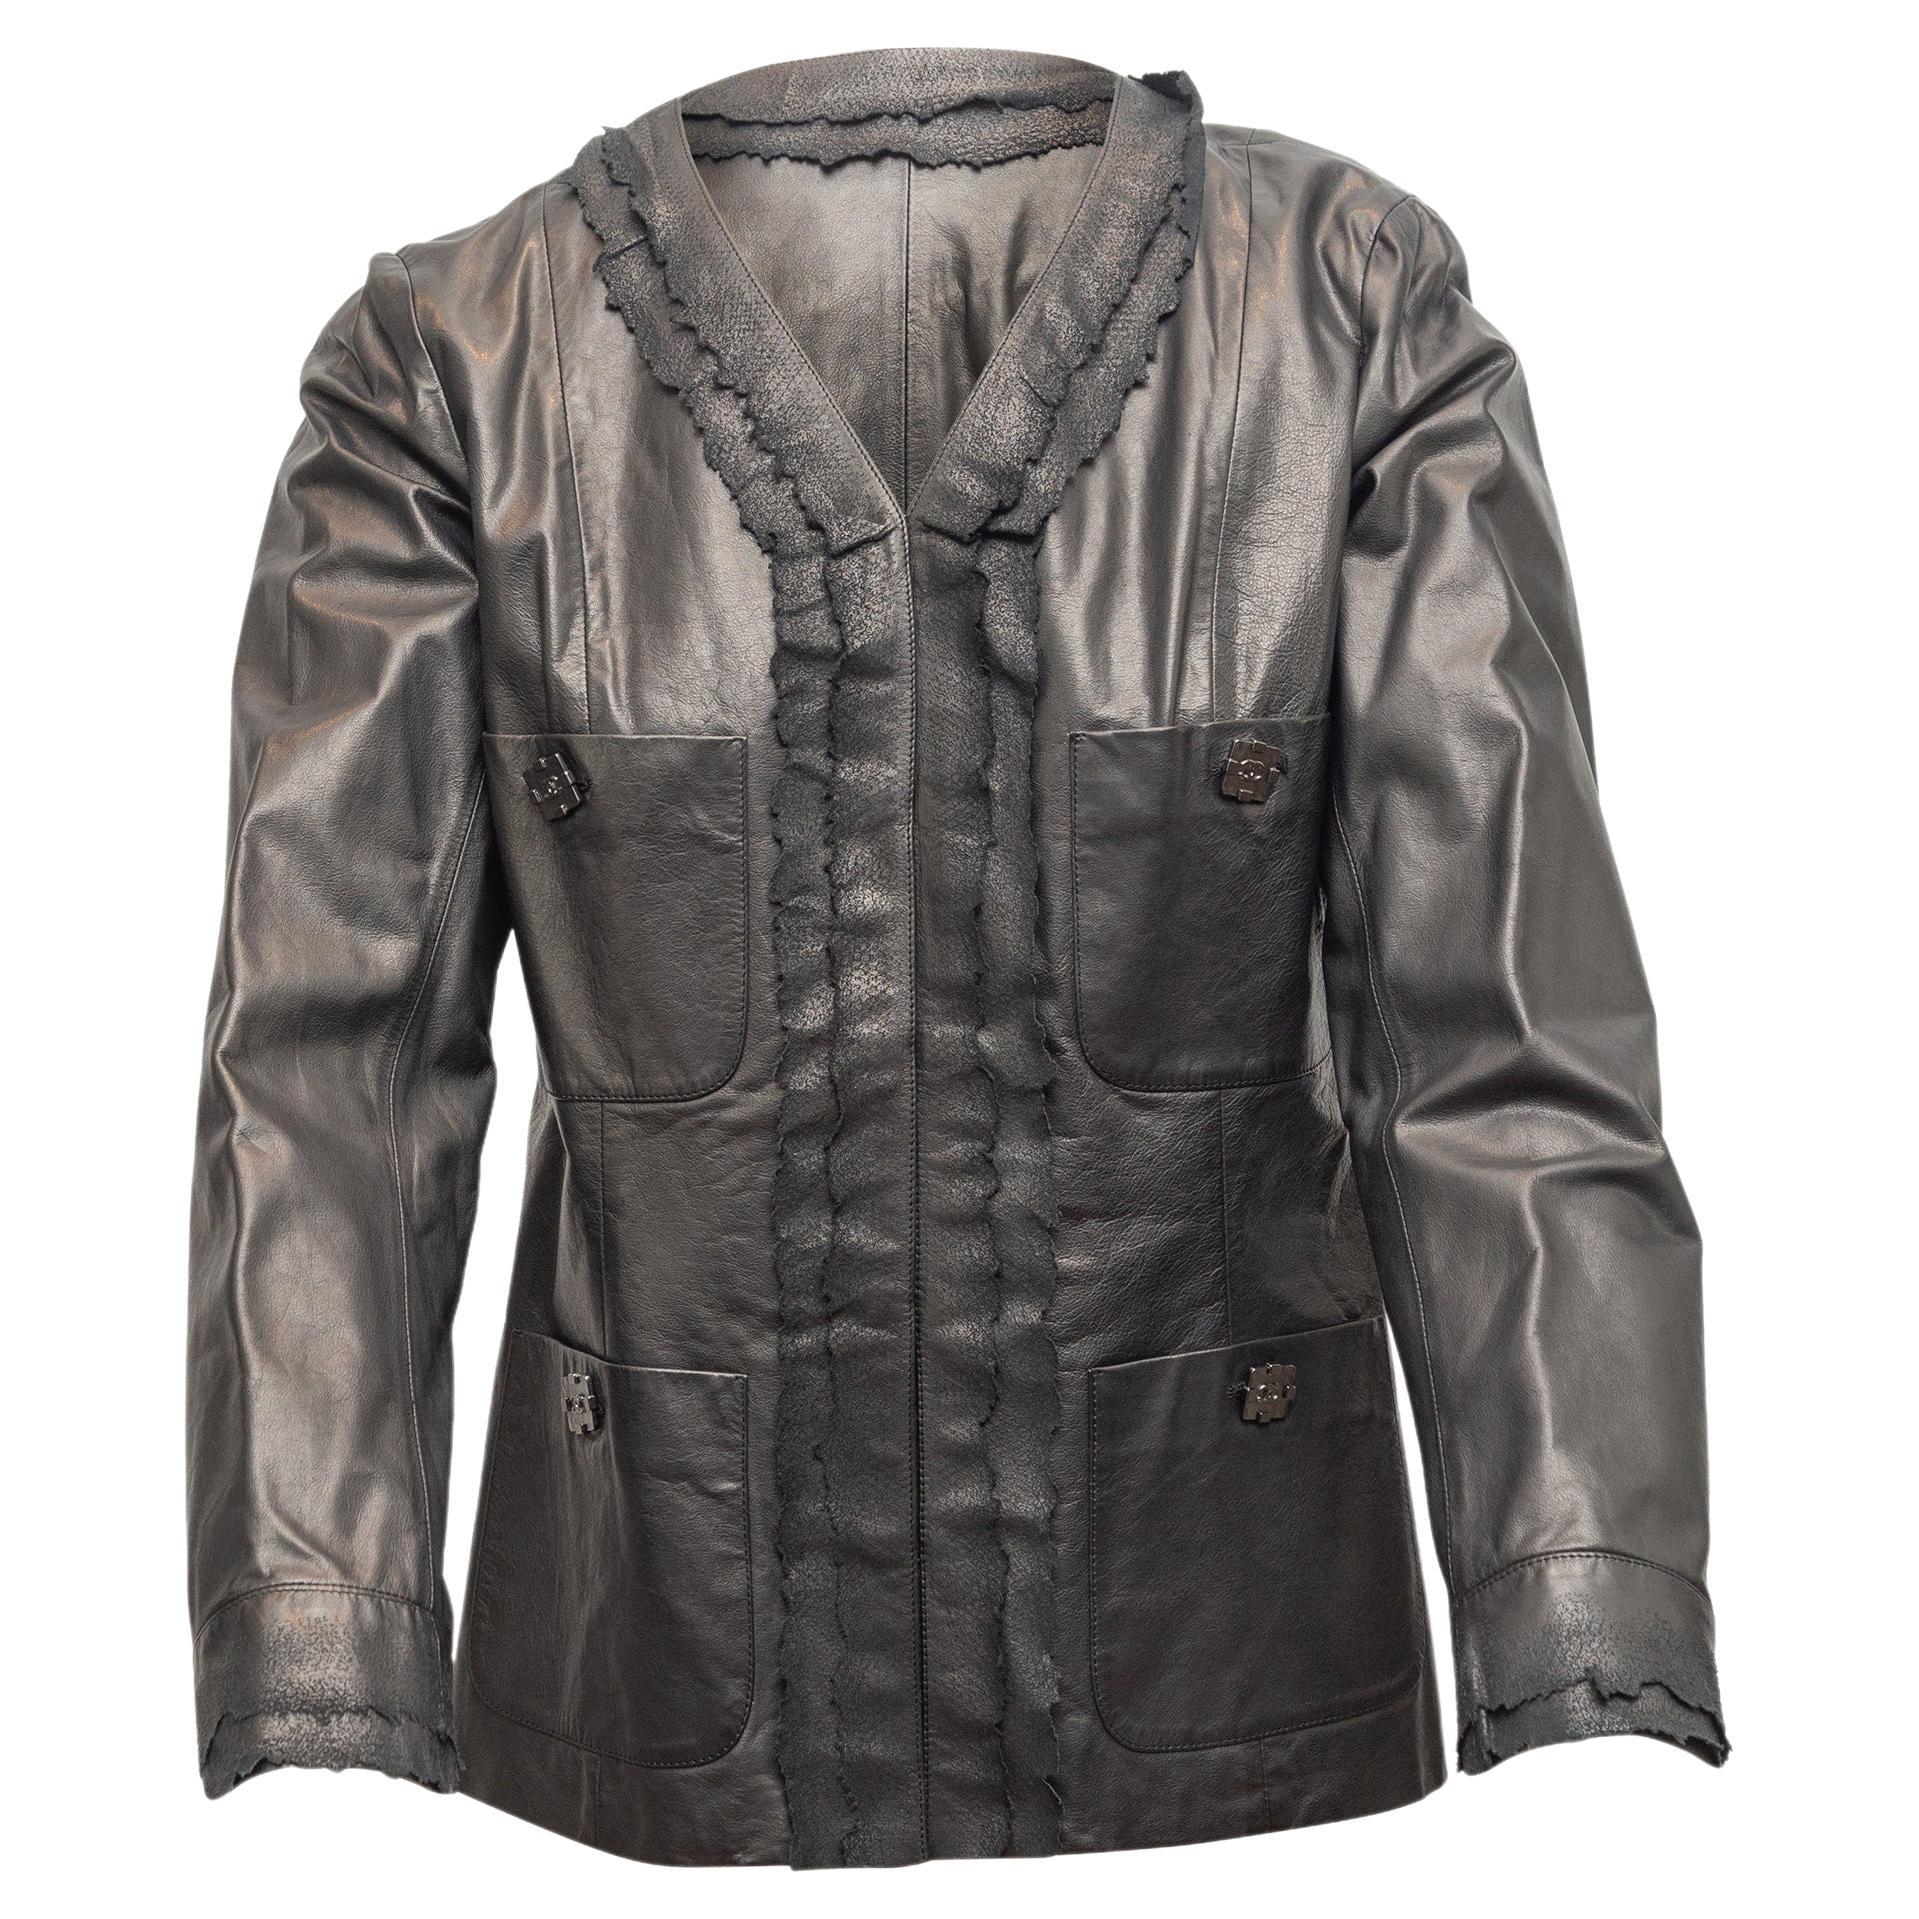 Chanel Black Leather Collarless Jacket